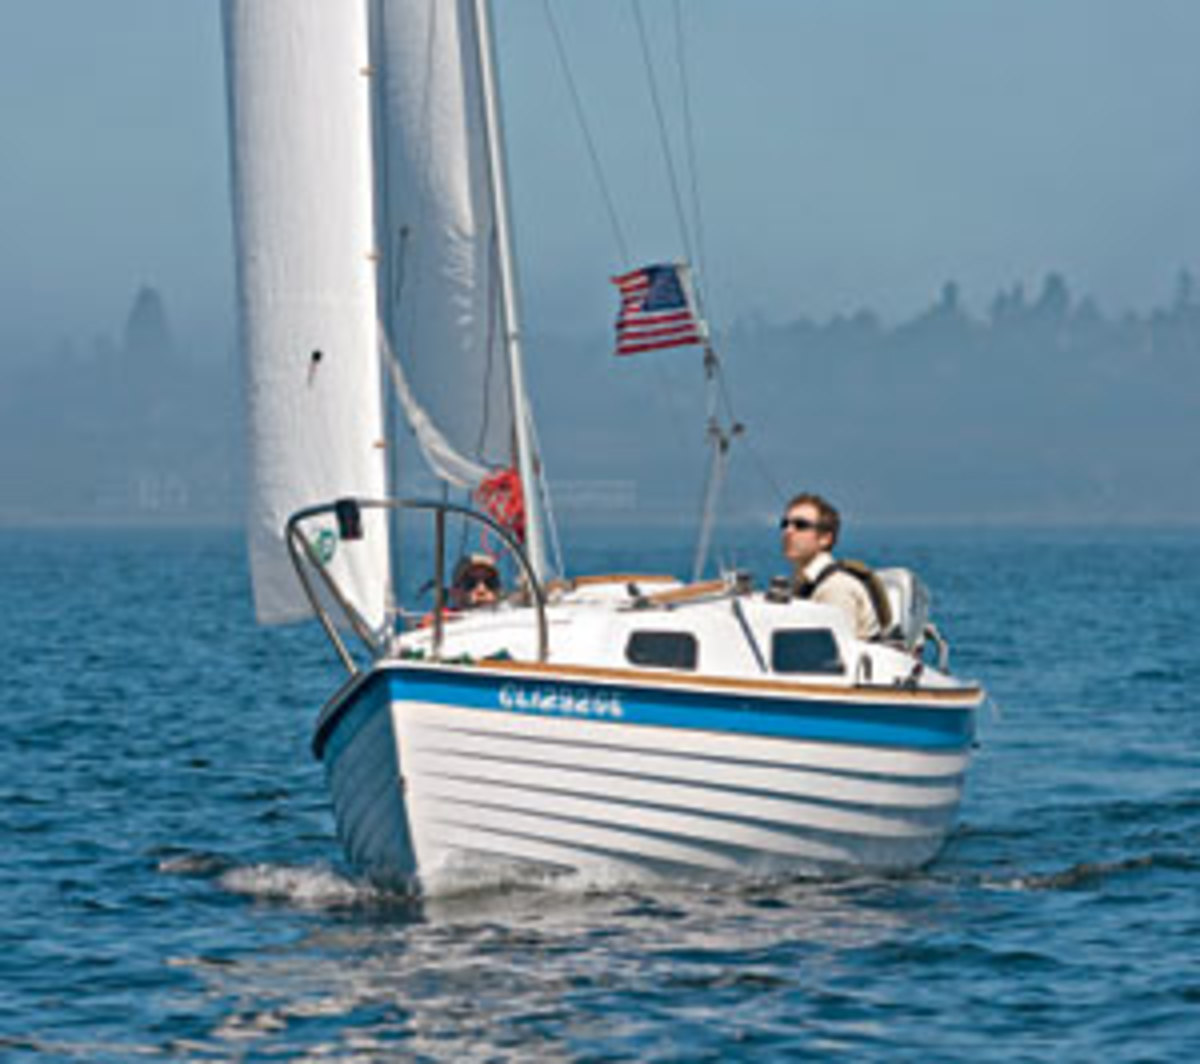 sage 17 sailboat data